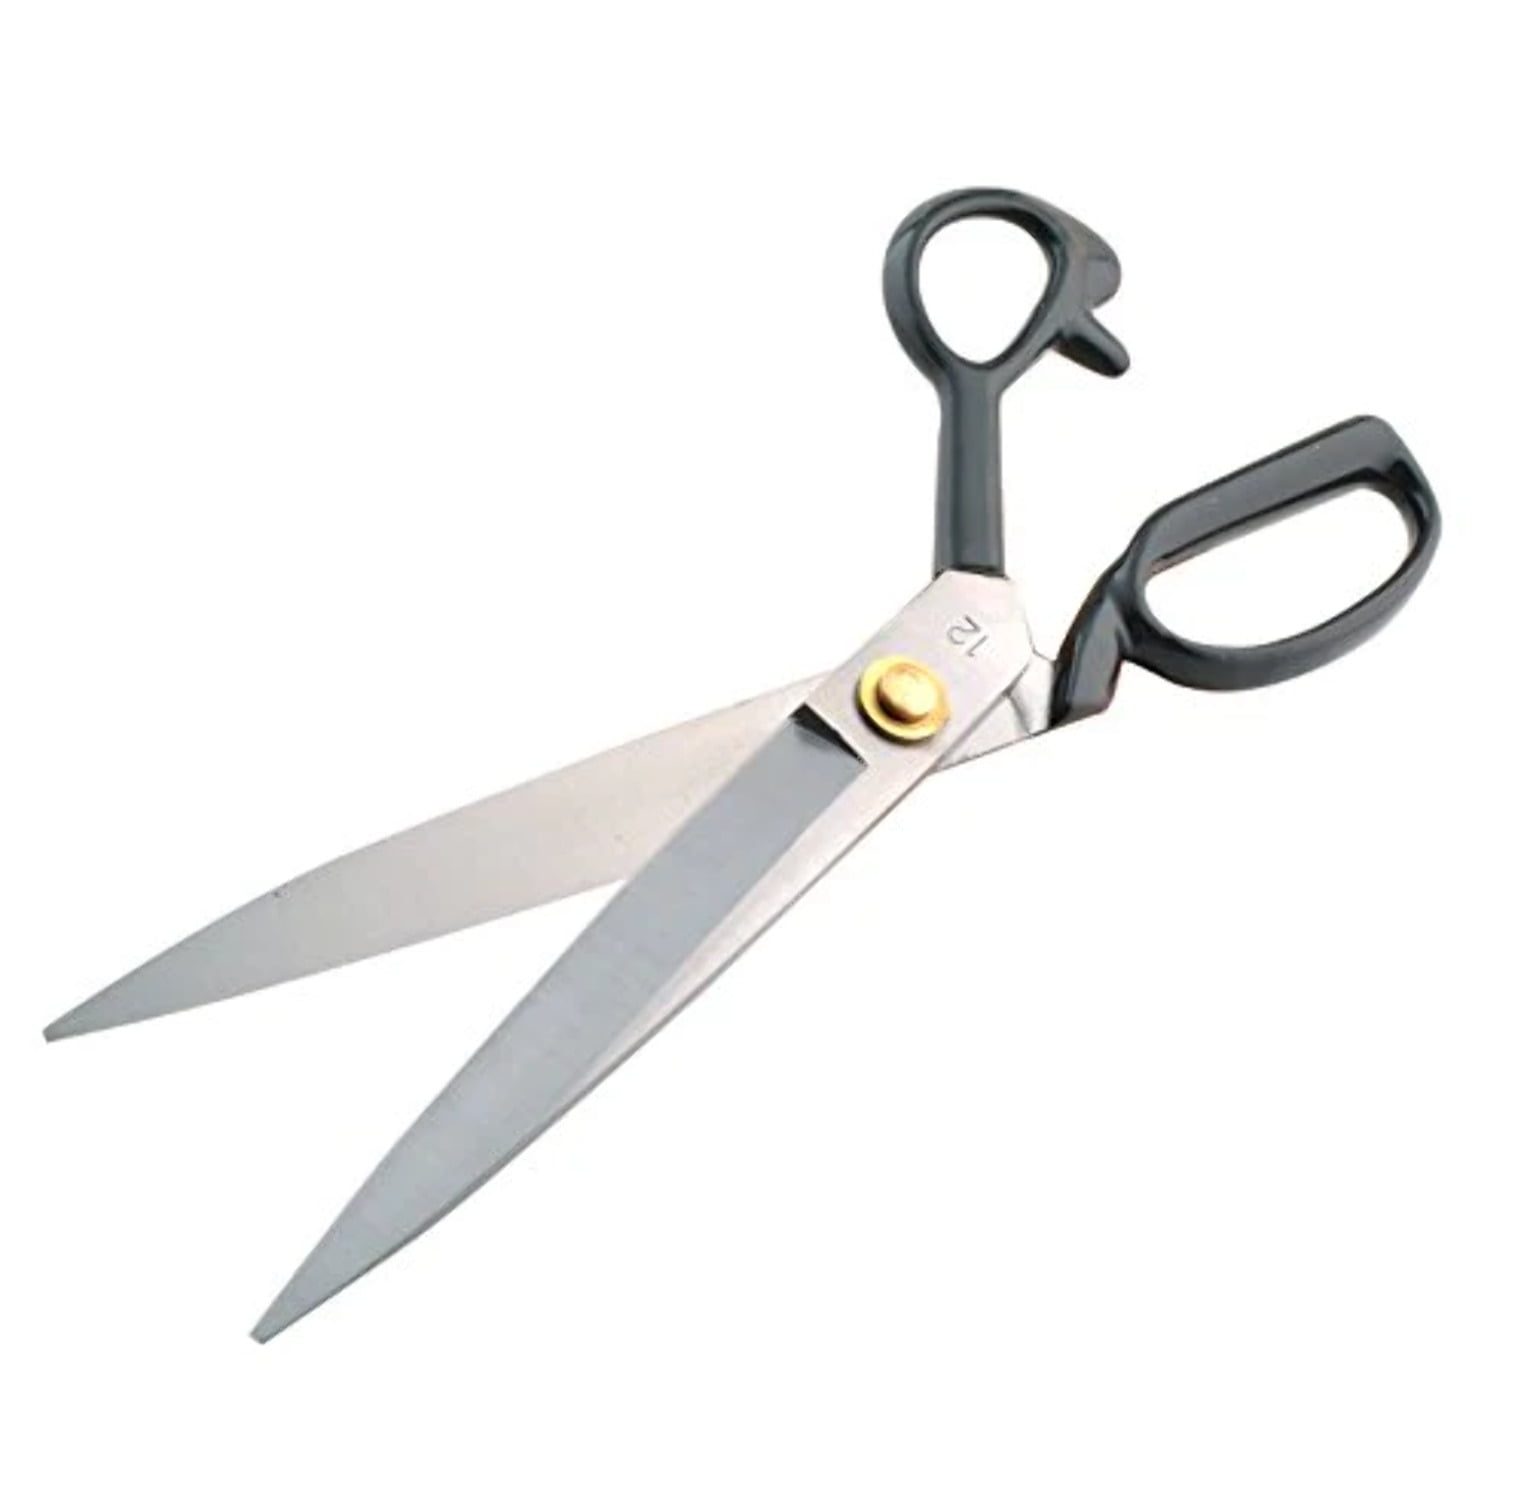 Kai 7240AS 9-1/2-Inch Serrated Edge Aramid Fabrics Shears Scissors